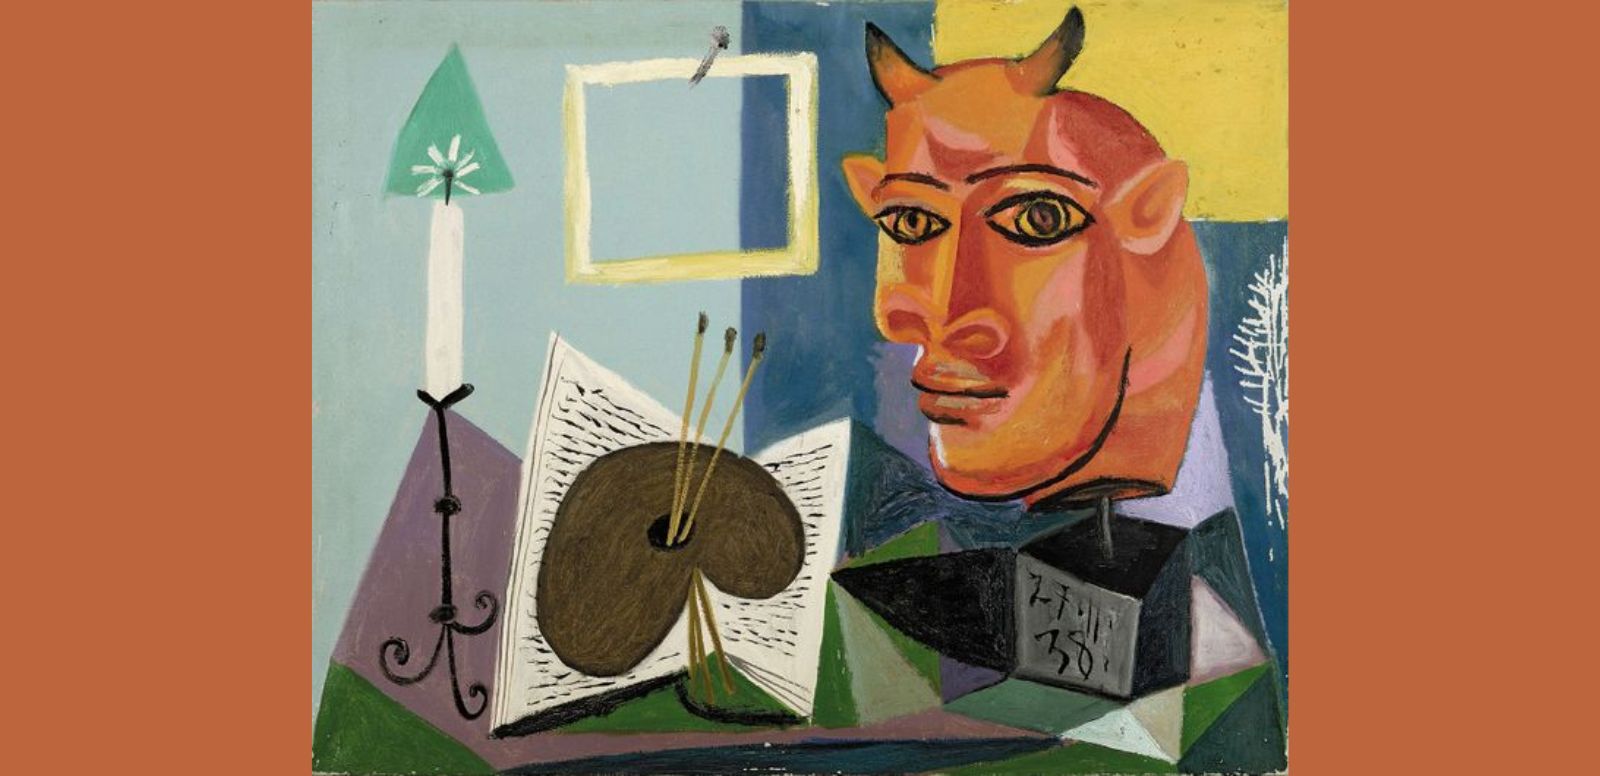 Pablo Picasso, "Bodegón con minotauro y paleta", 1938. 